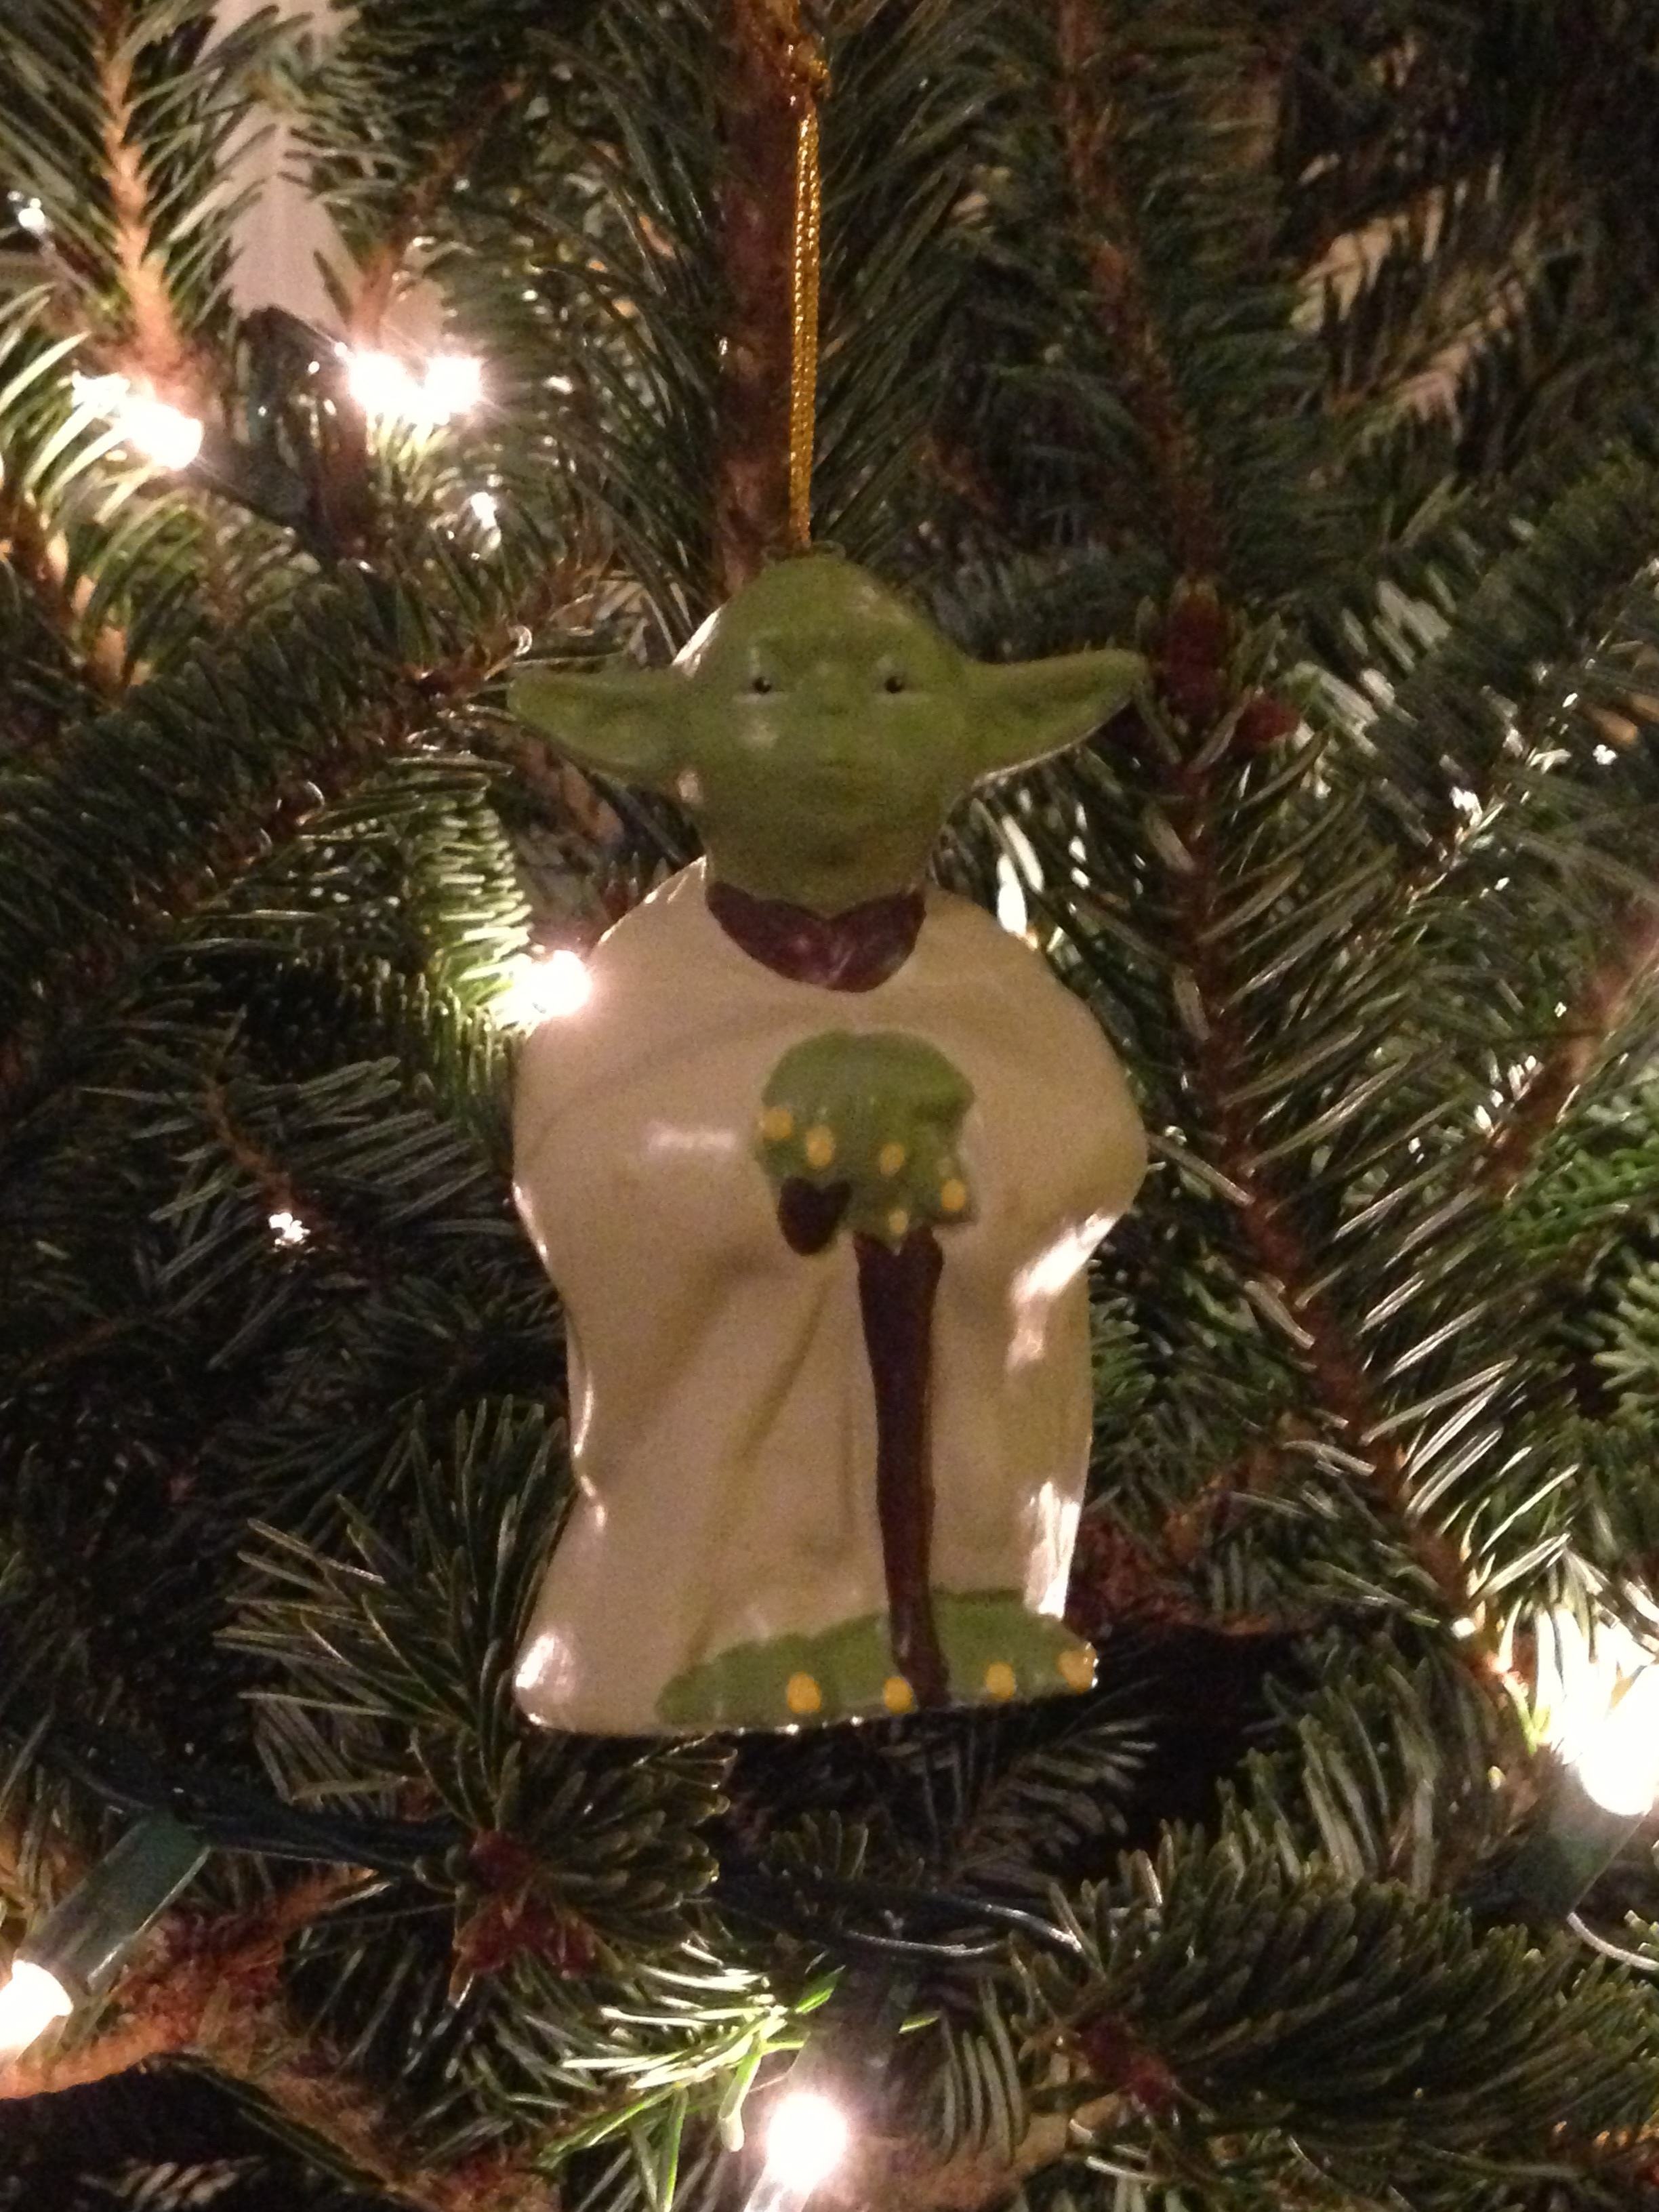 Yoda on Christmas tree left